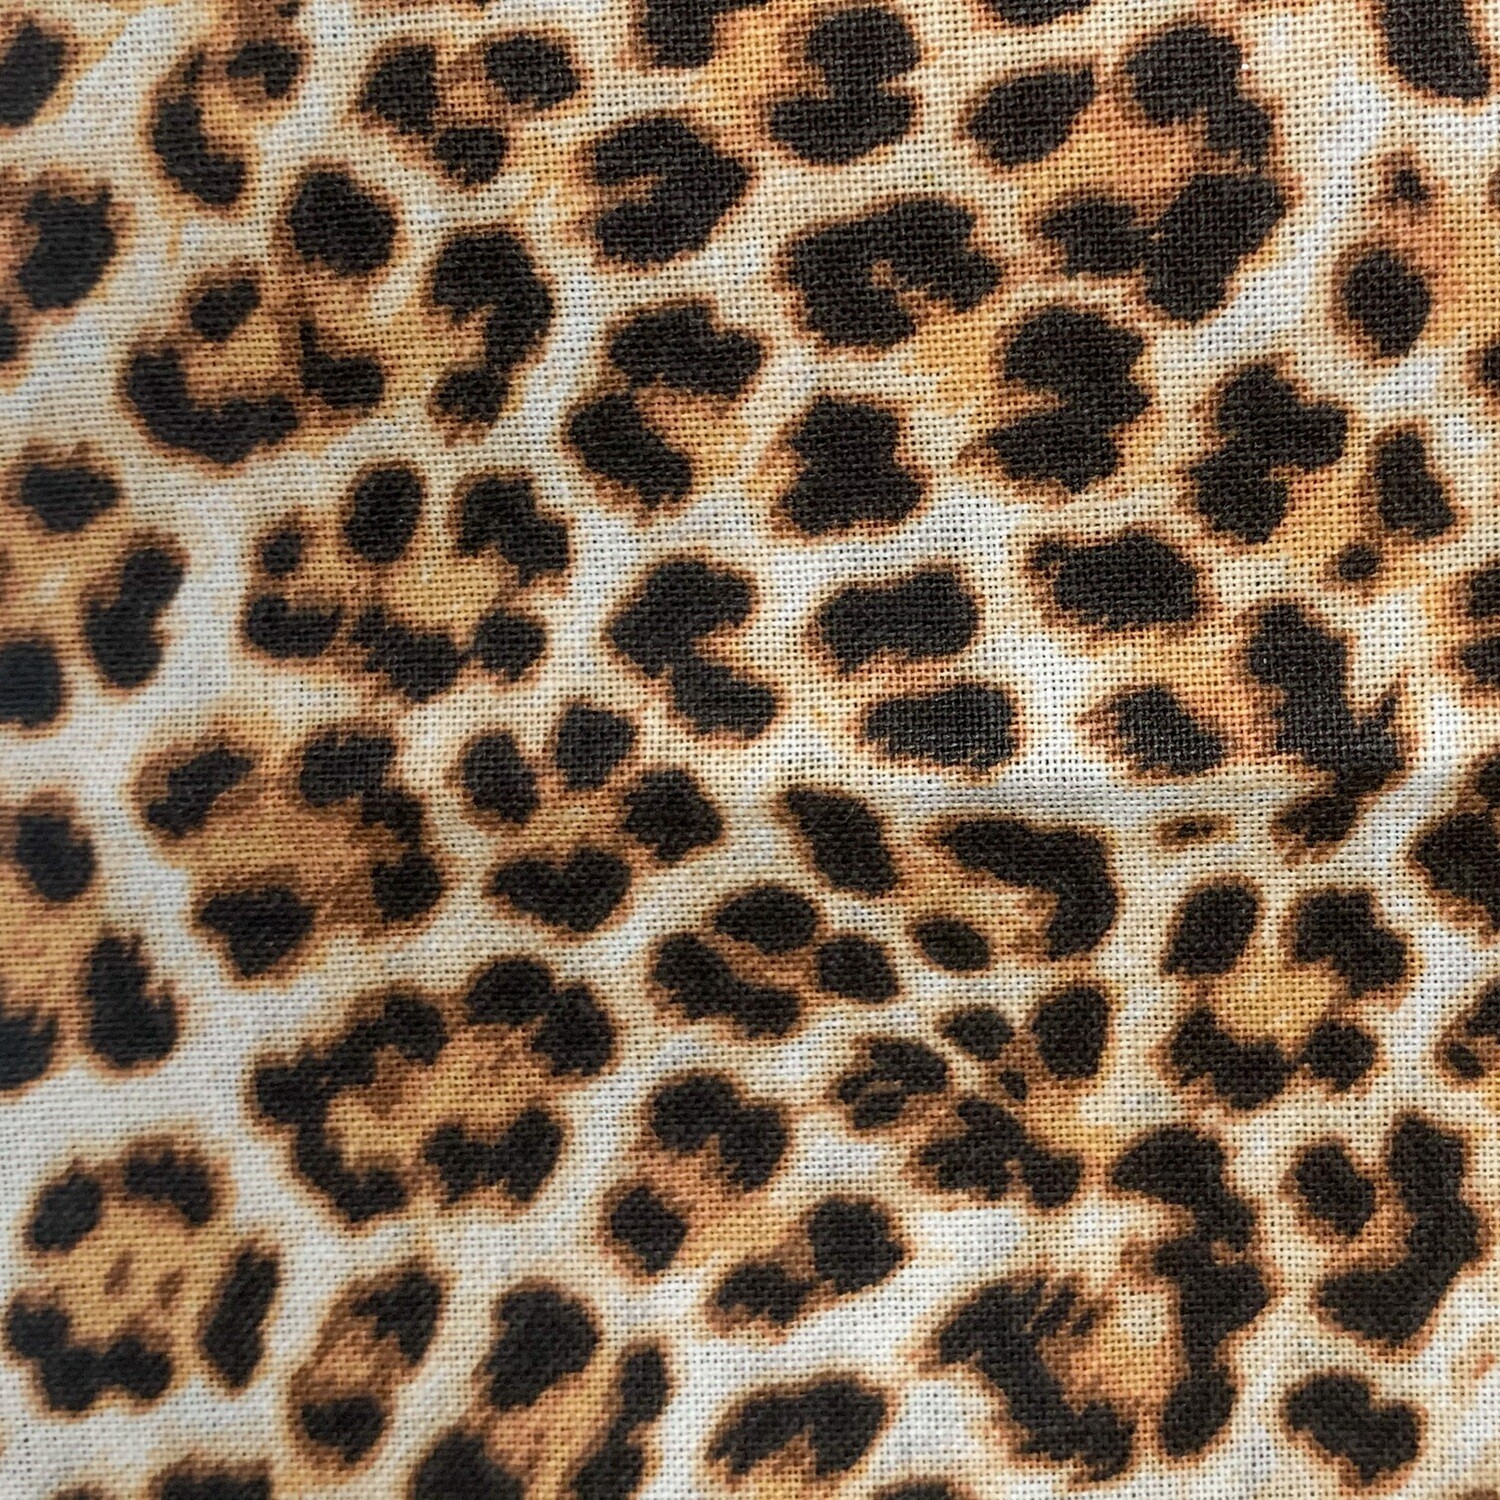 Catnip Cat Toy (Cheetah Print)